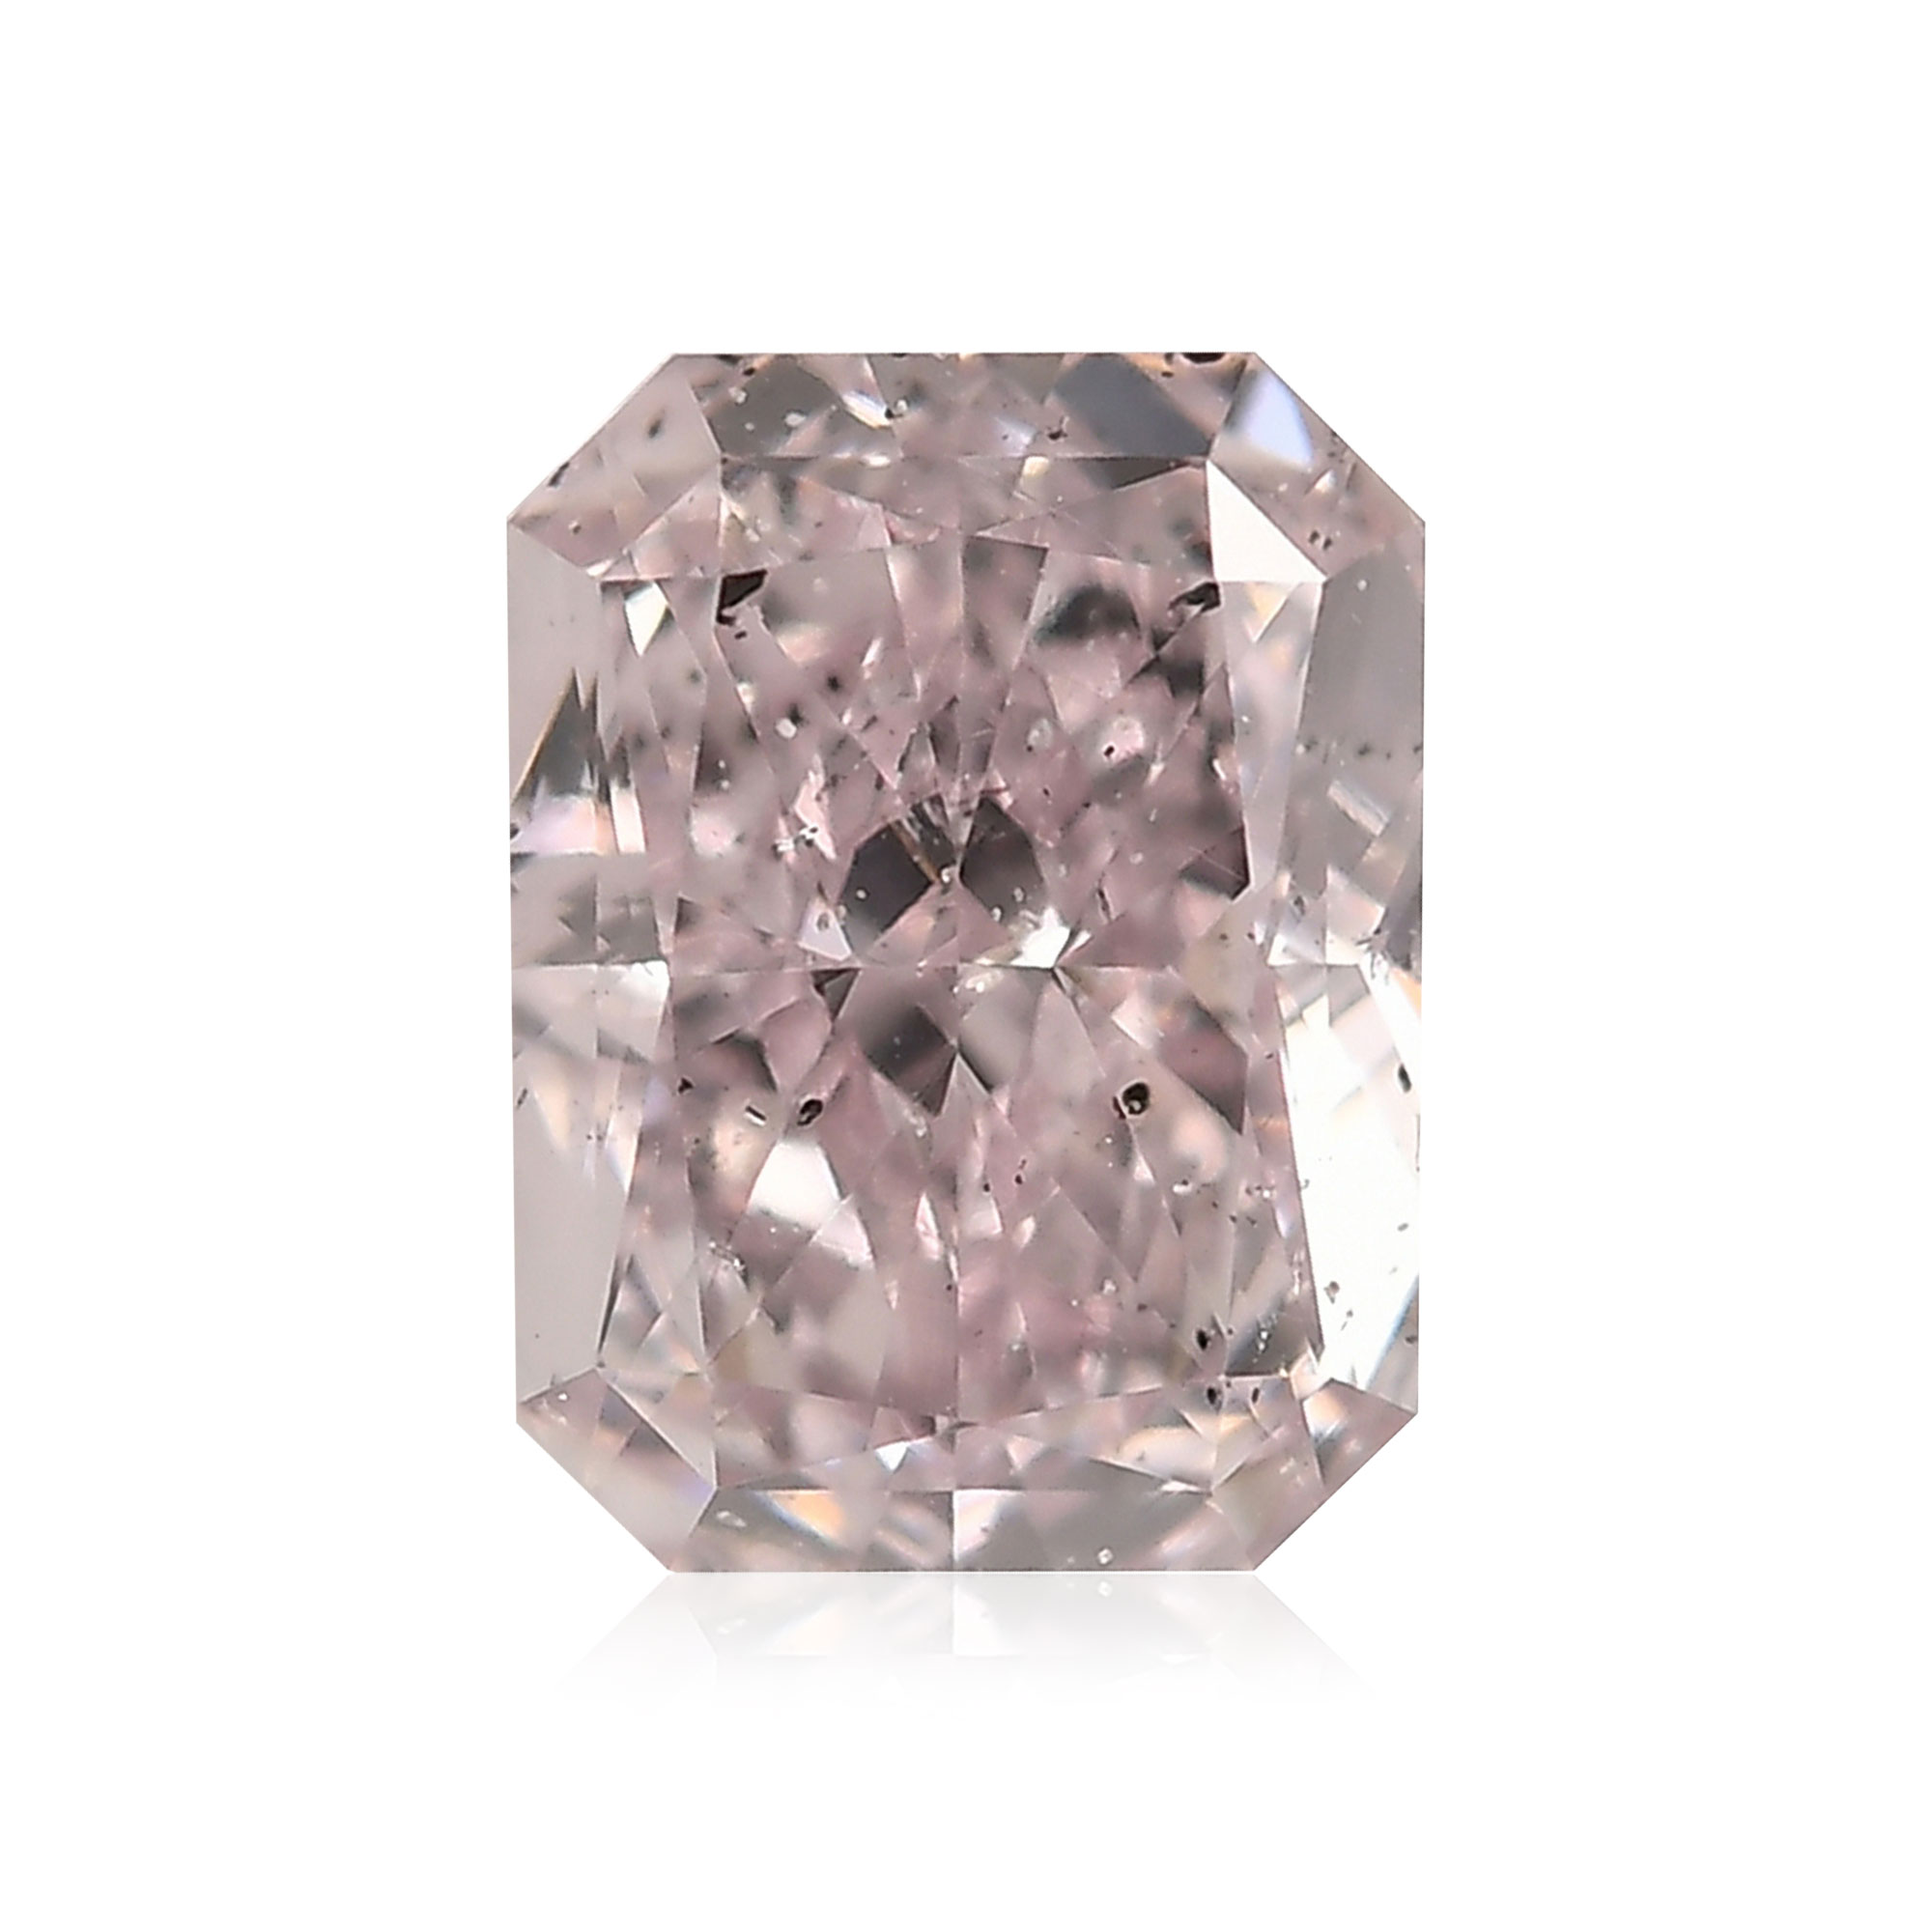 1.07 carat, Light Purplish Pink Diamond, Radiant Shape, SI2 Clarity, GIA, SKU 521245